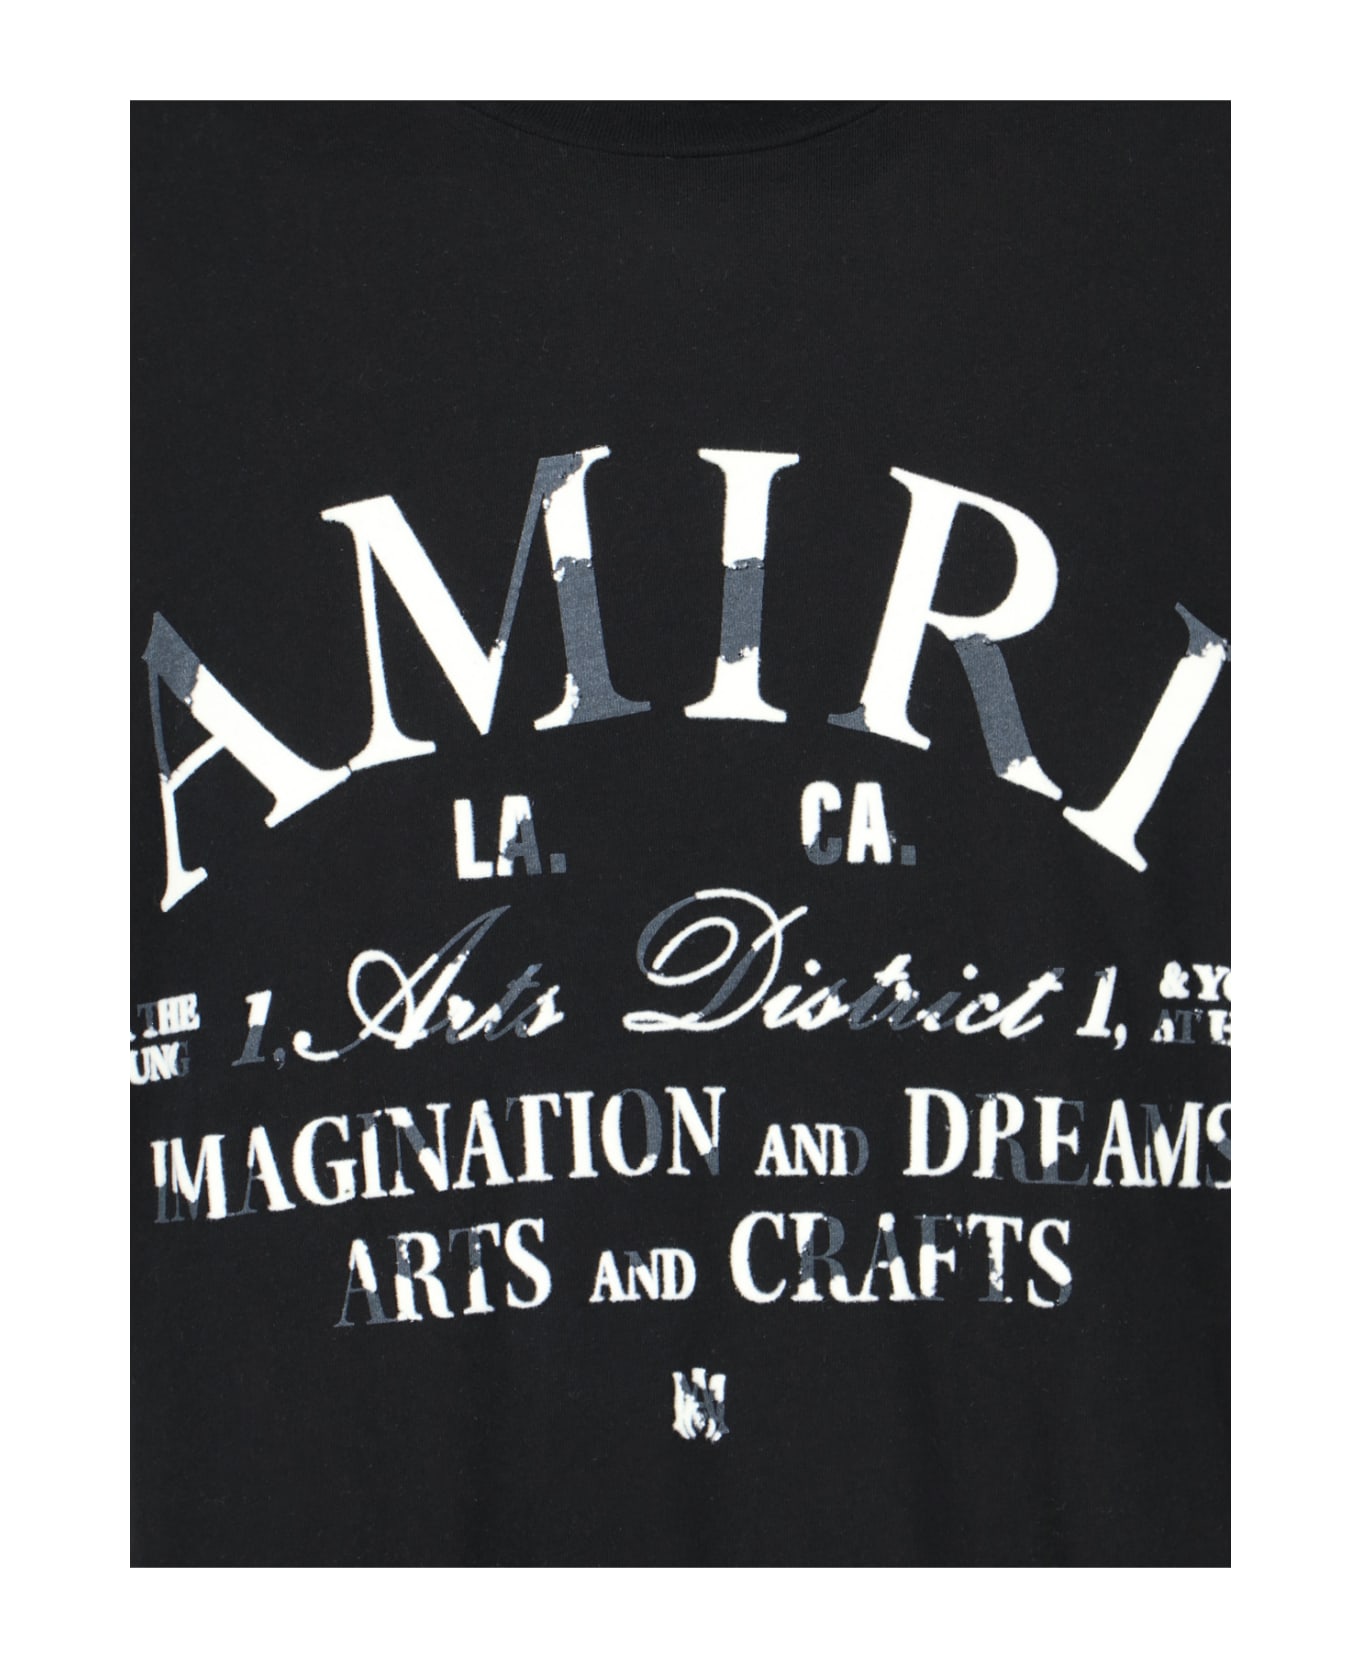 AMIRI Printed T-shirt - Black  